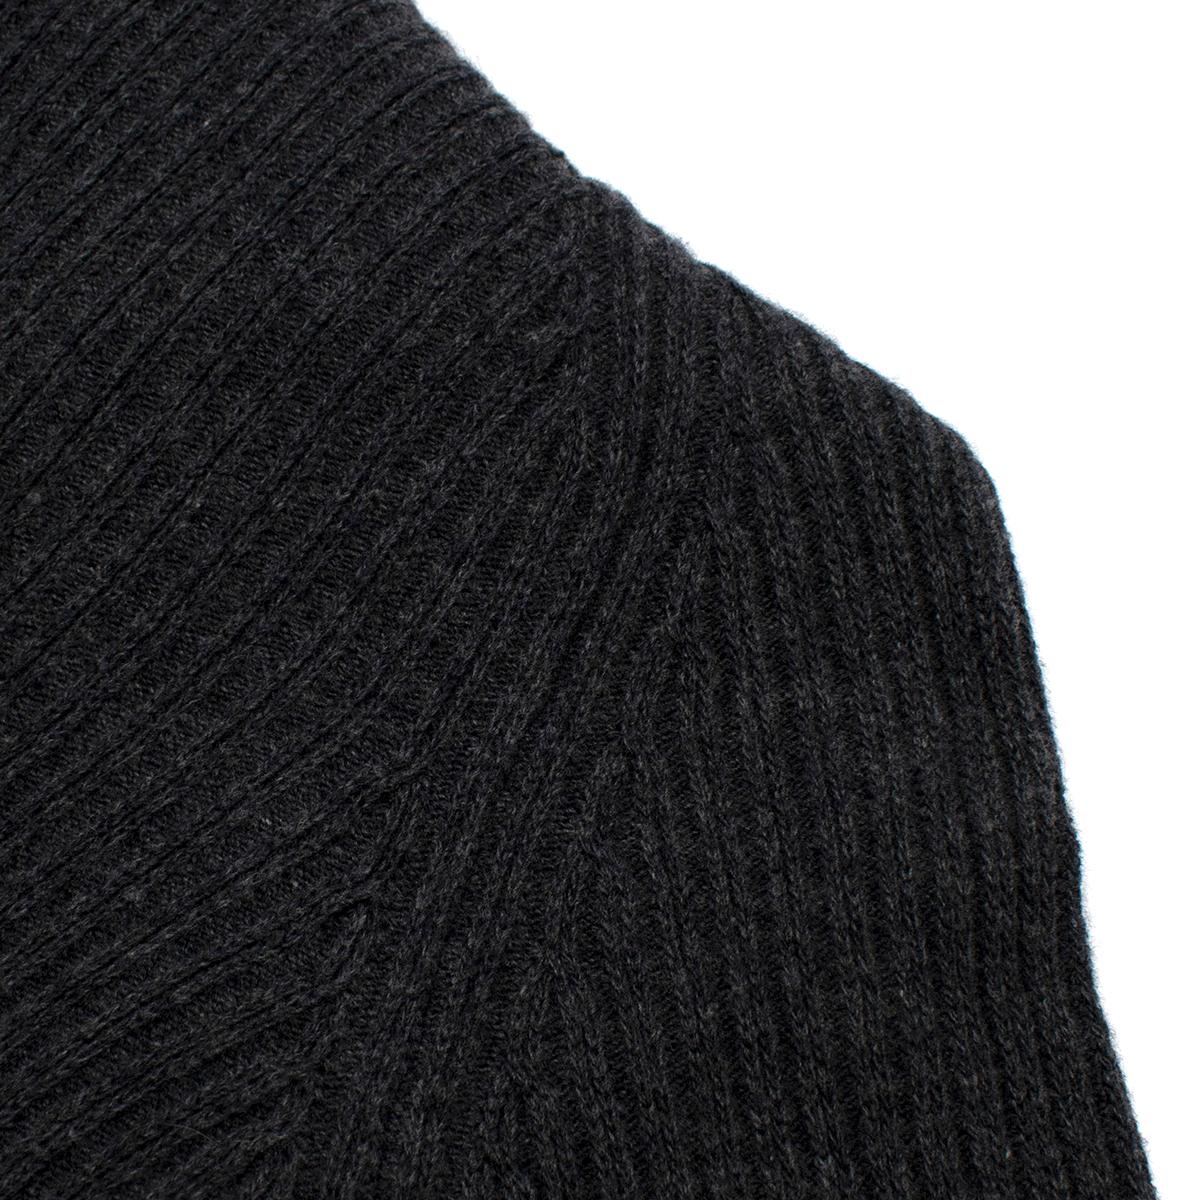 Ermenegildo Zenga Cashmere Blend Grey Sweater - Us size 38 For Sale 2